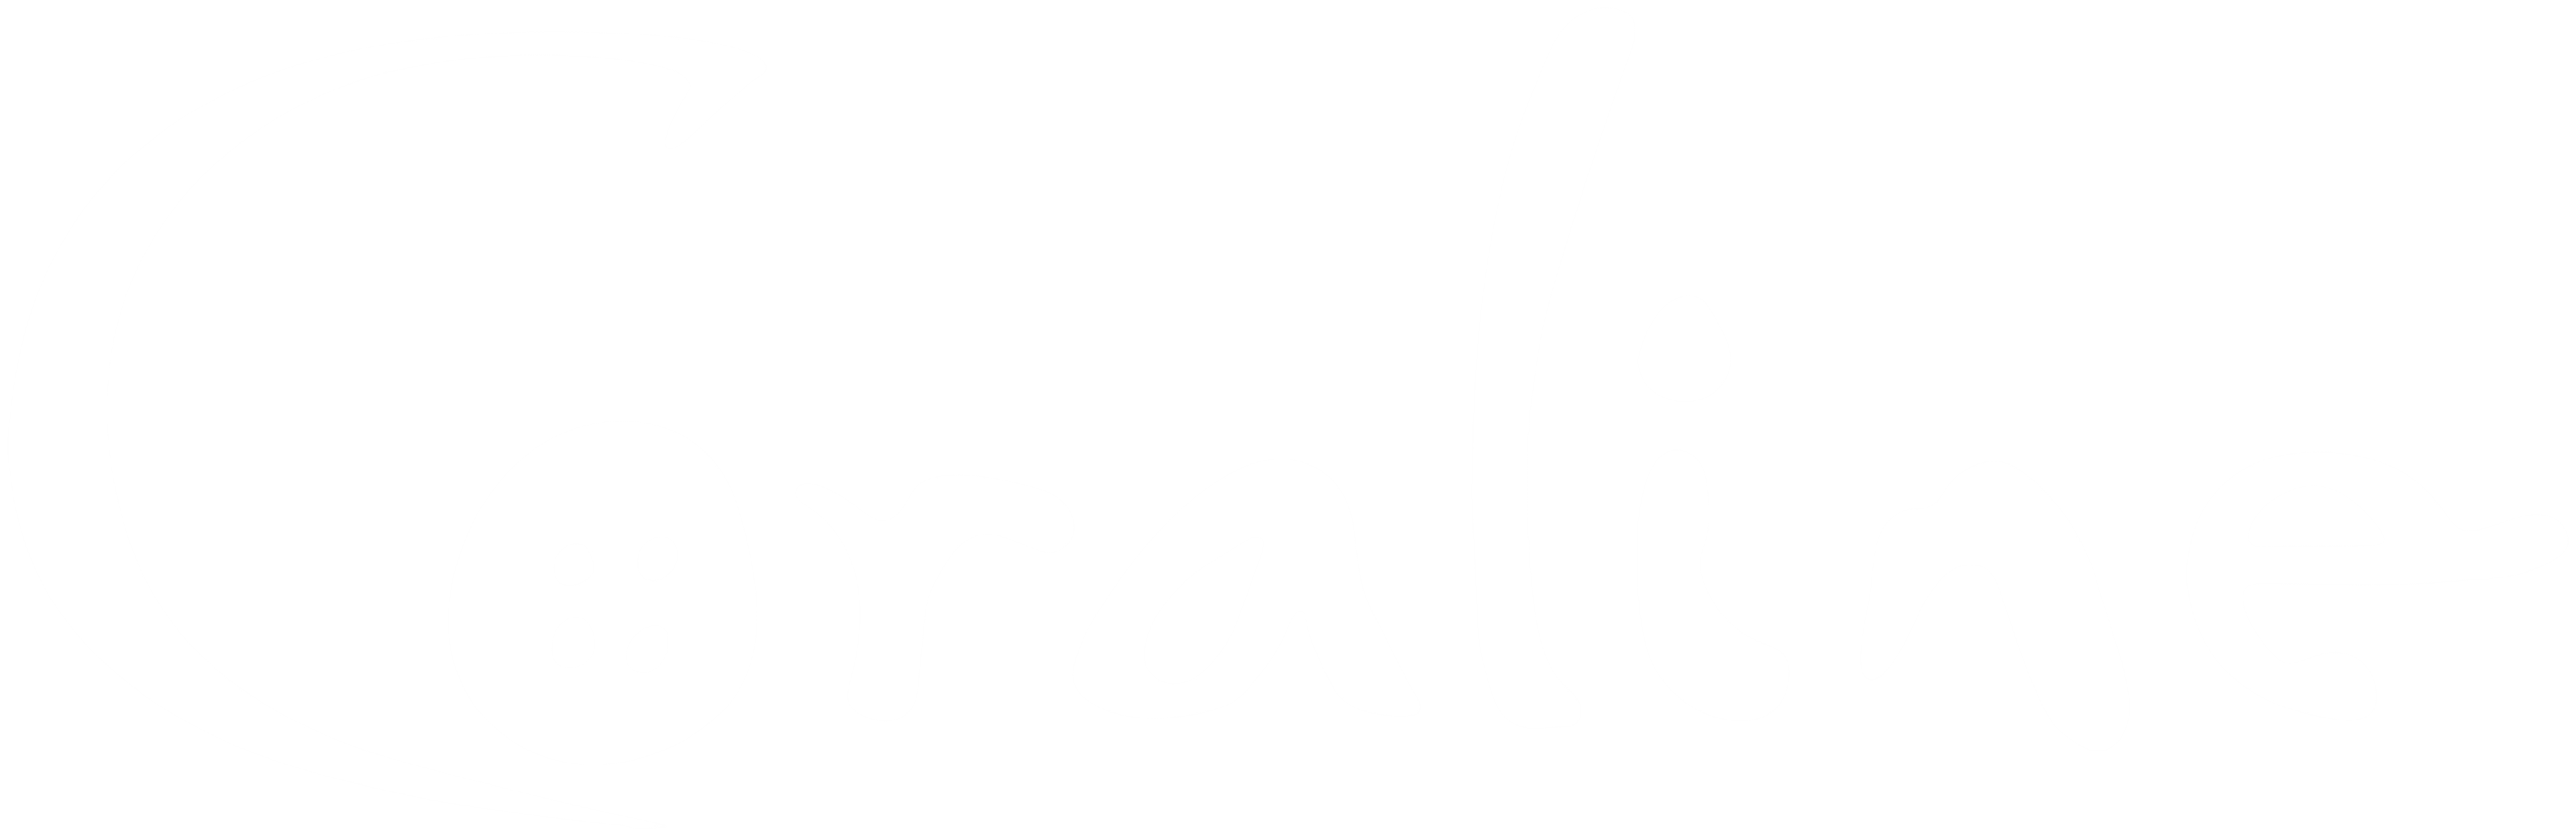 Coraline logo